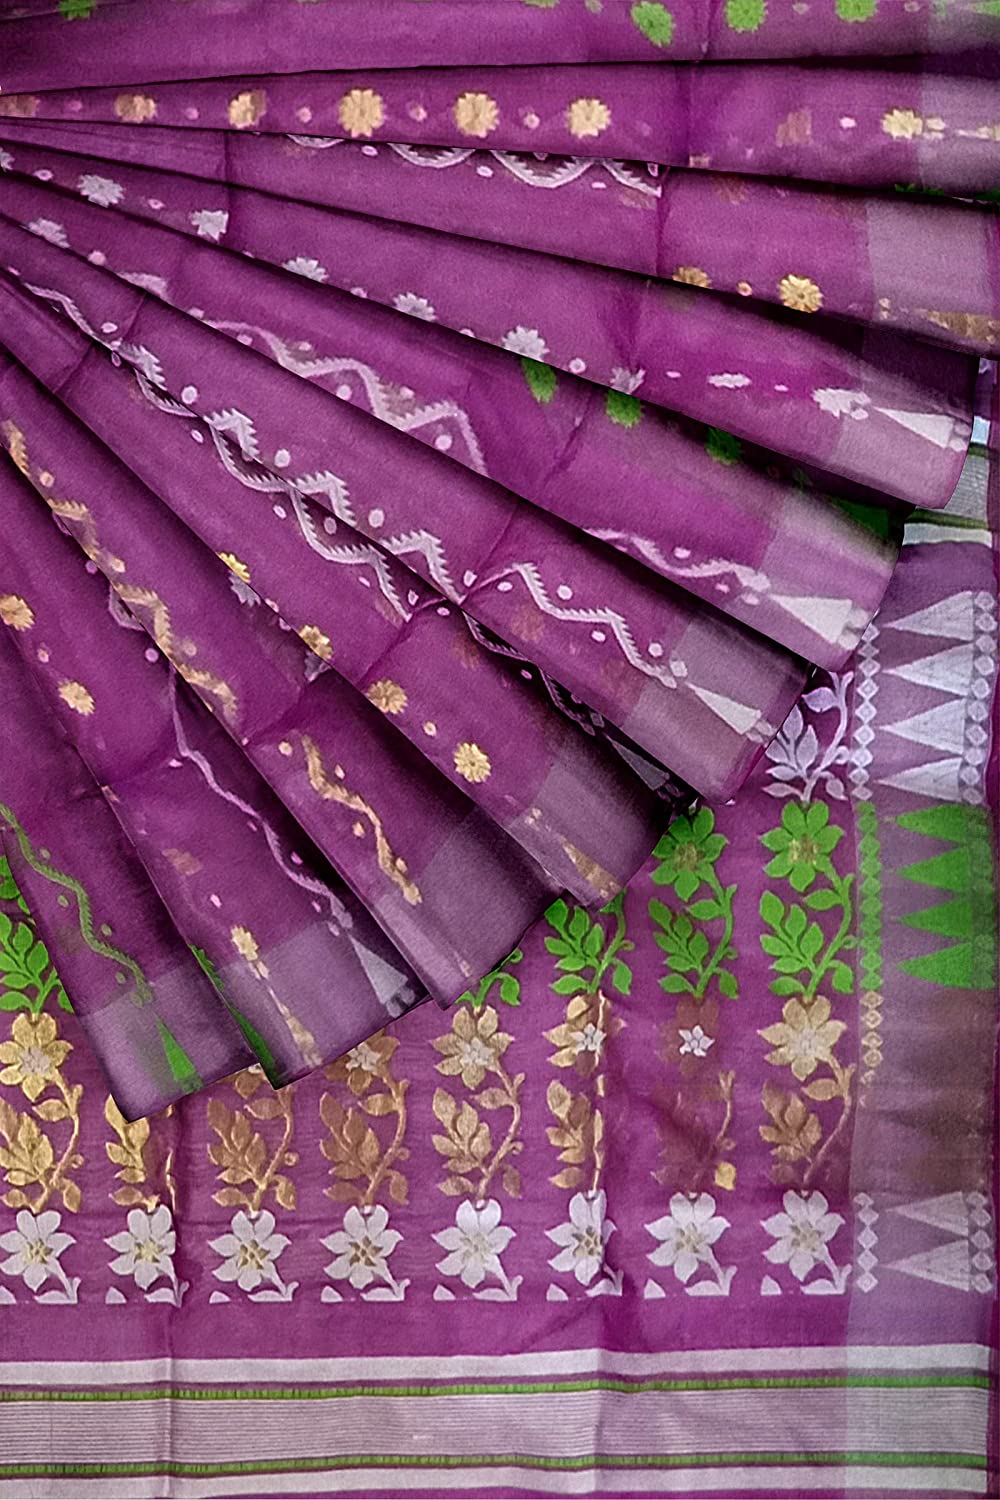 Pradip Fabrics Ethnic Women's Tant Jamdani Purple Color Saree